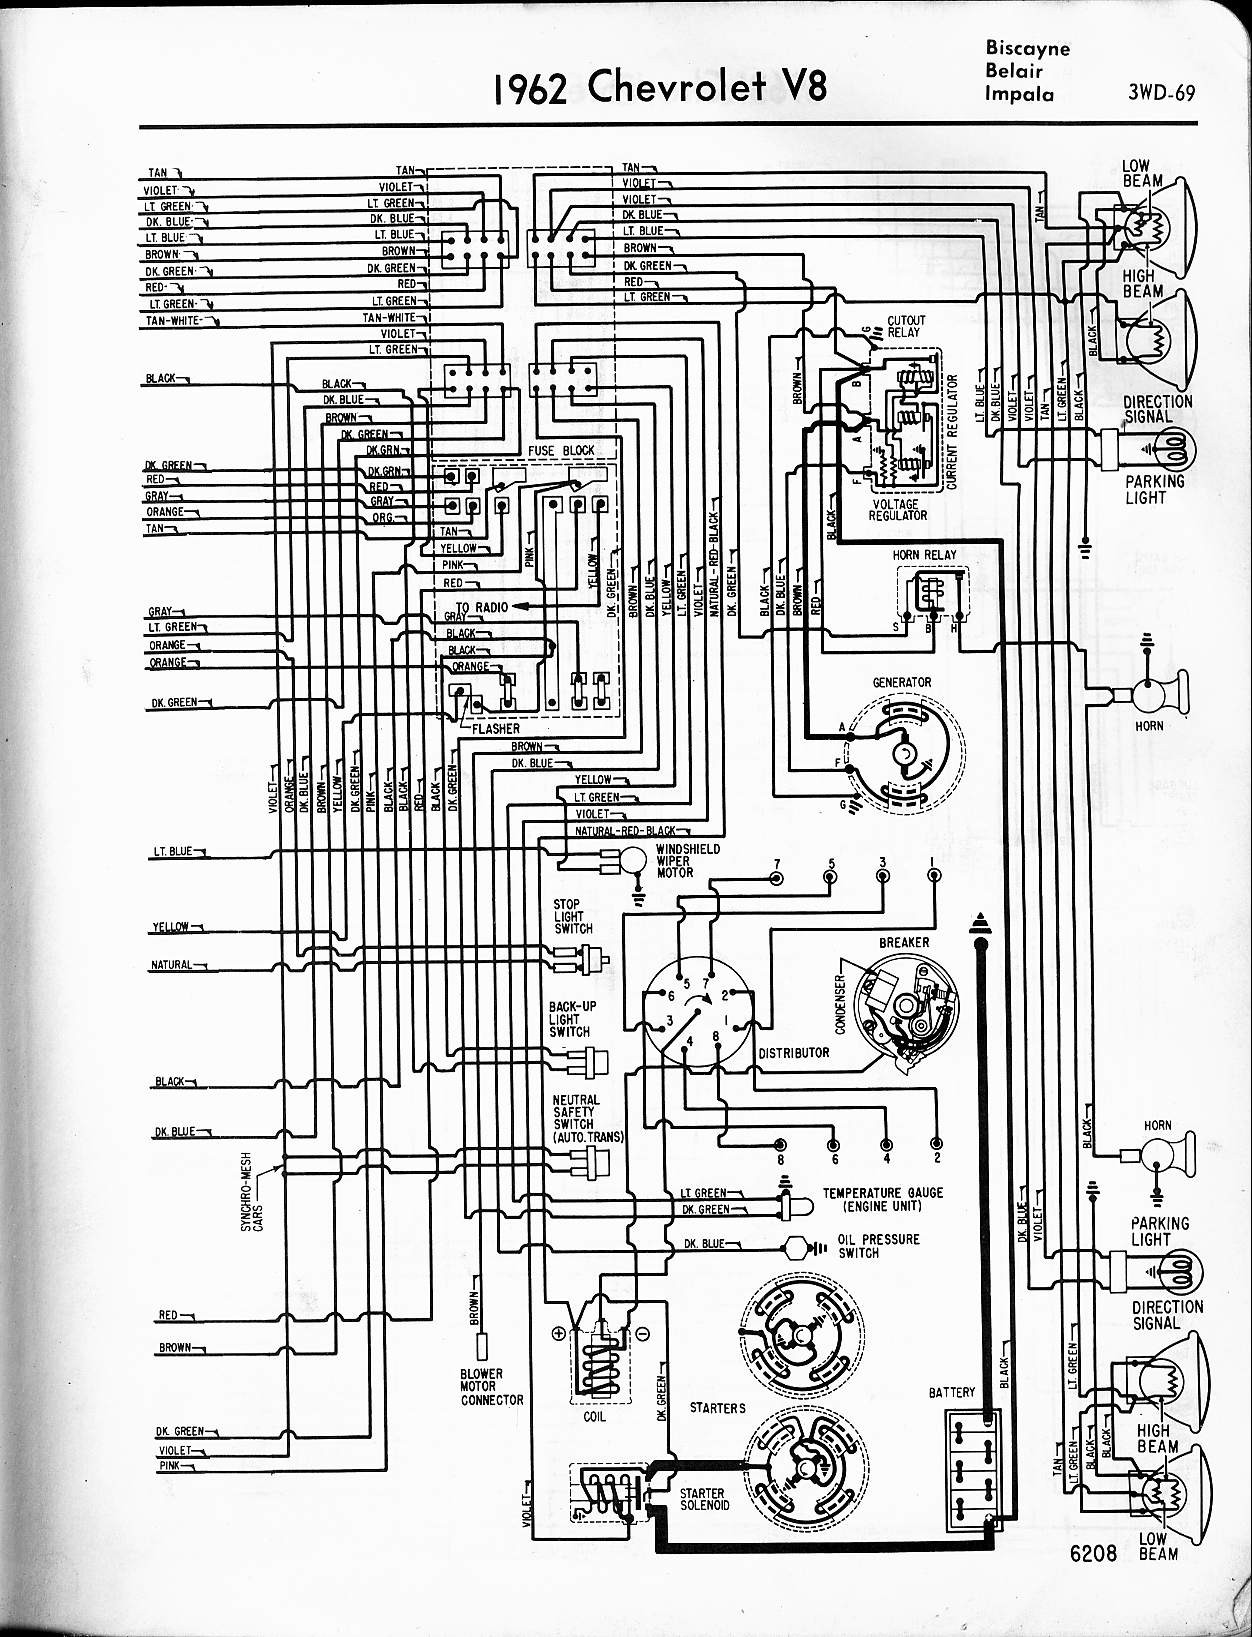 2005 Chevy Impala Engine Diagram 57 65 Chevy Wiring Diagrams Of 2005 Chevy Impala Engine Diagram